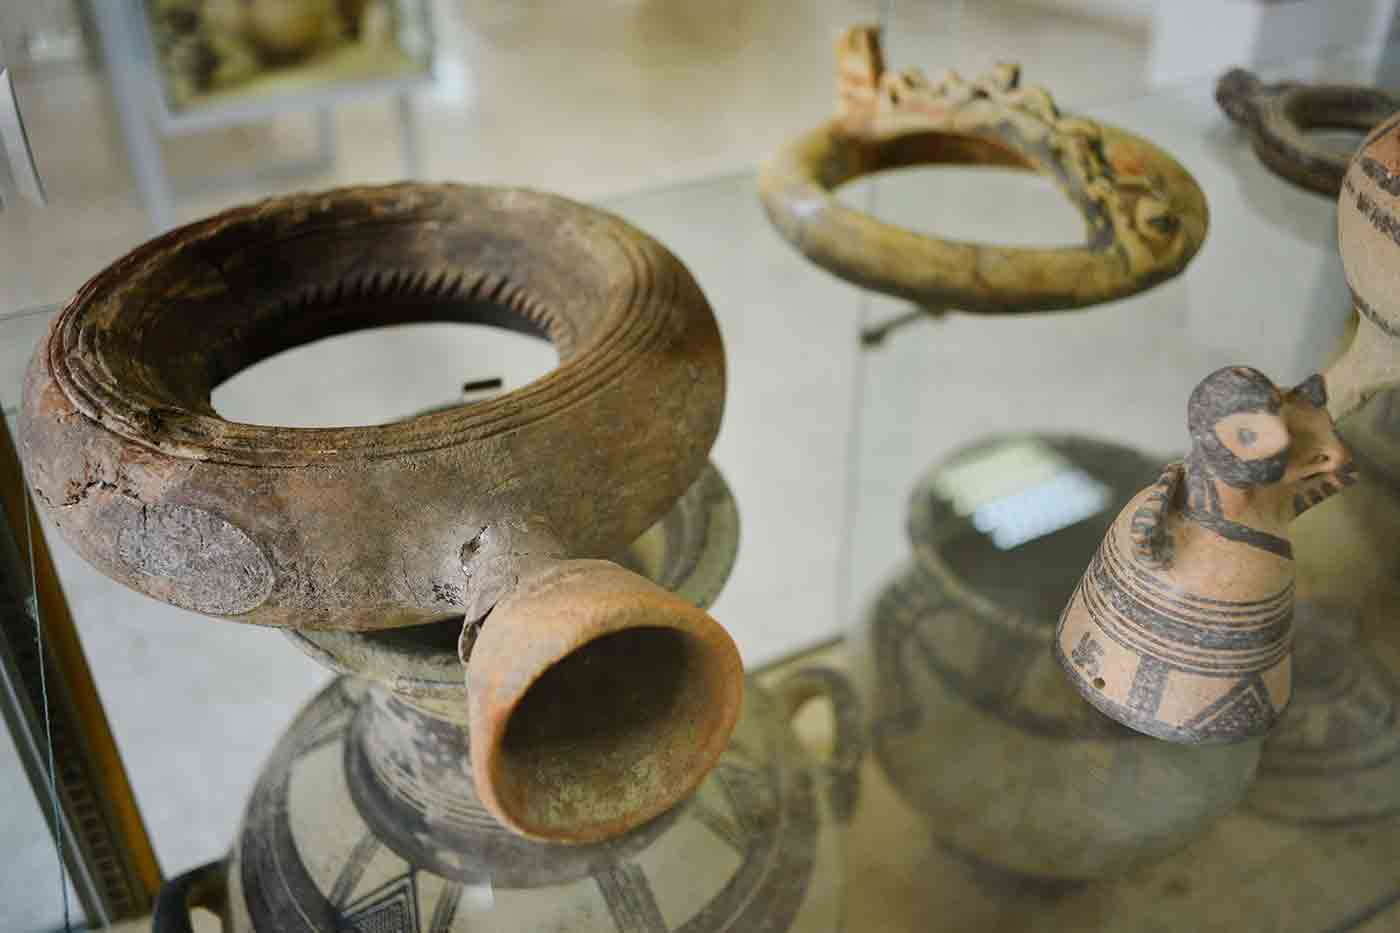 Limassol Archaeological Museum